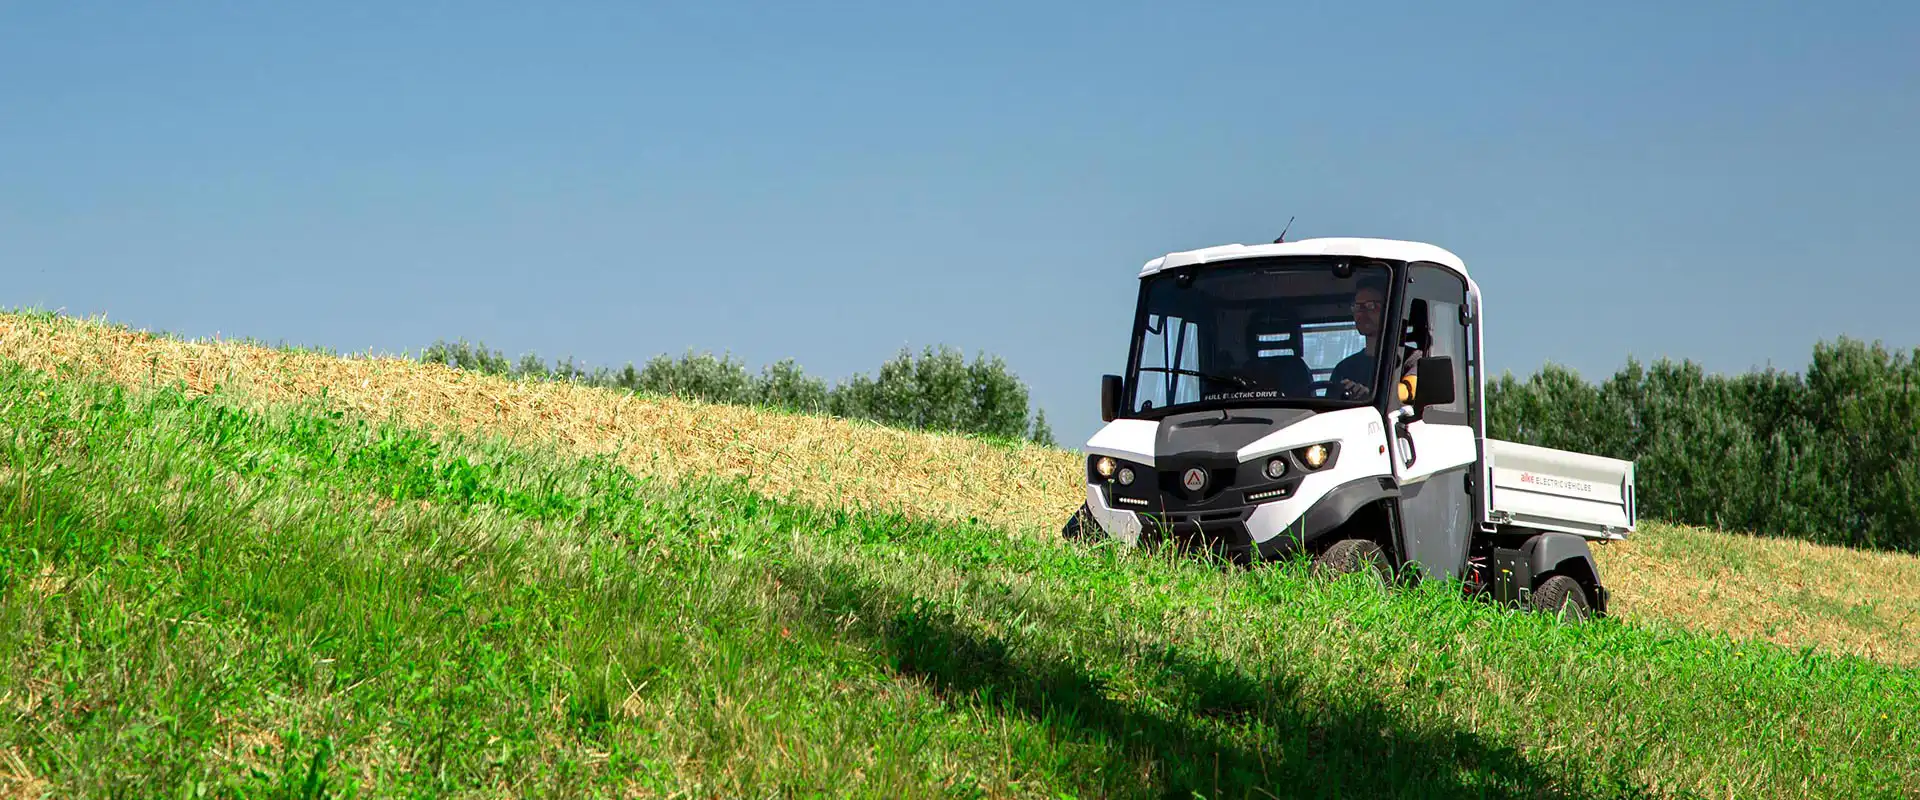 Farm utility vehicles - Small transporters Alke' ATX